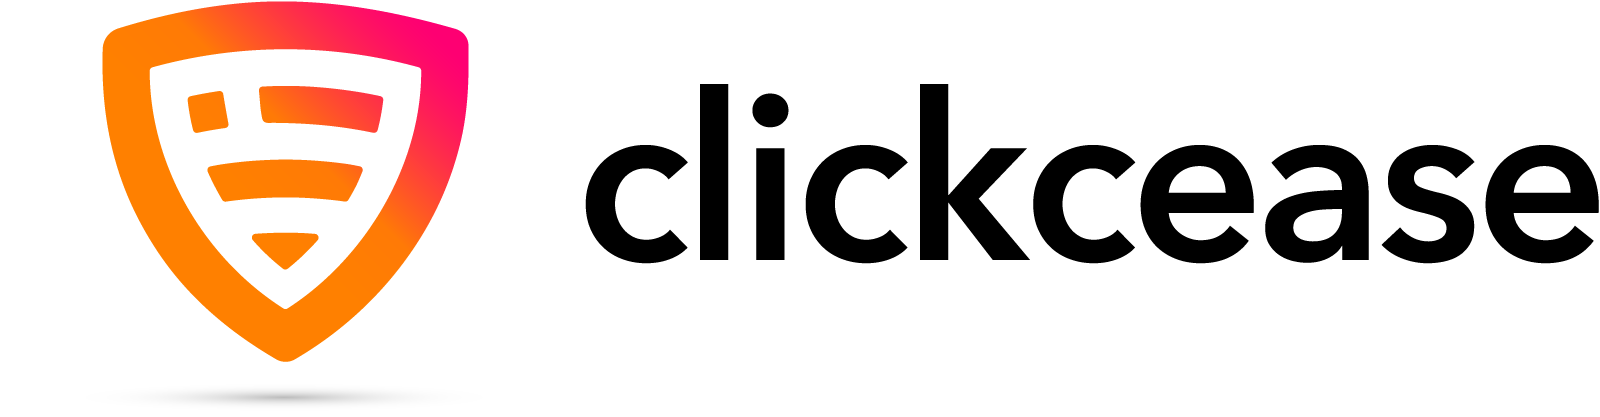 Cheq Logo